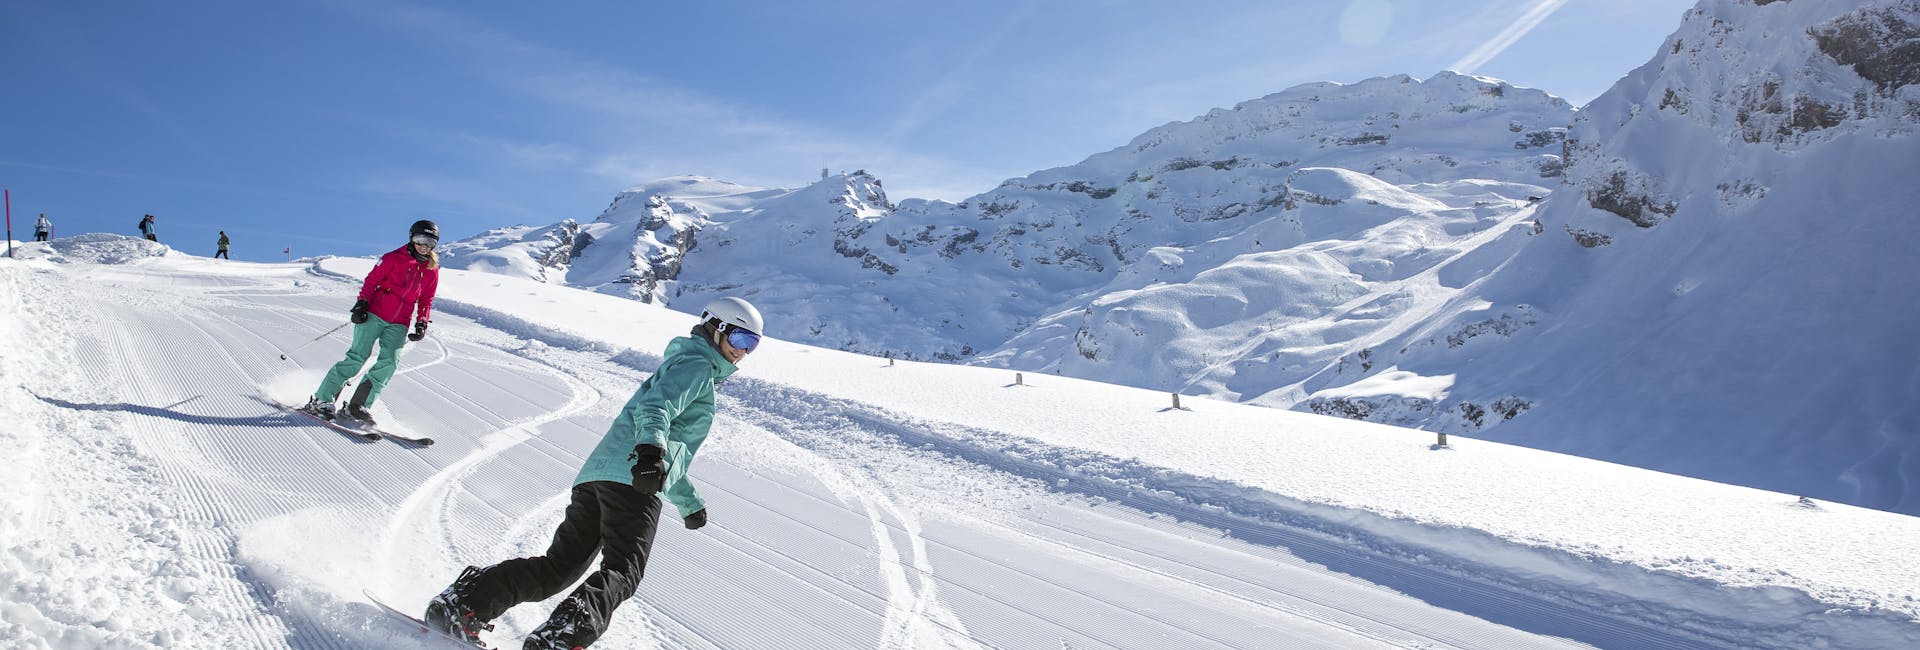 Engelberg Ski Resort